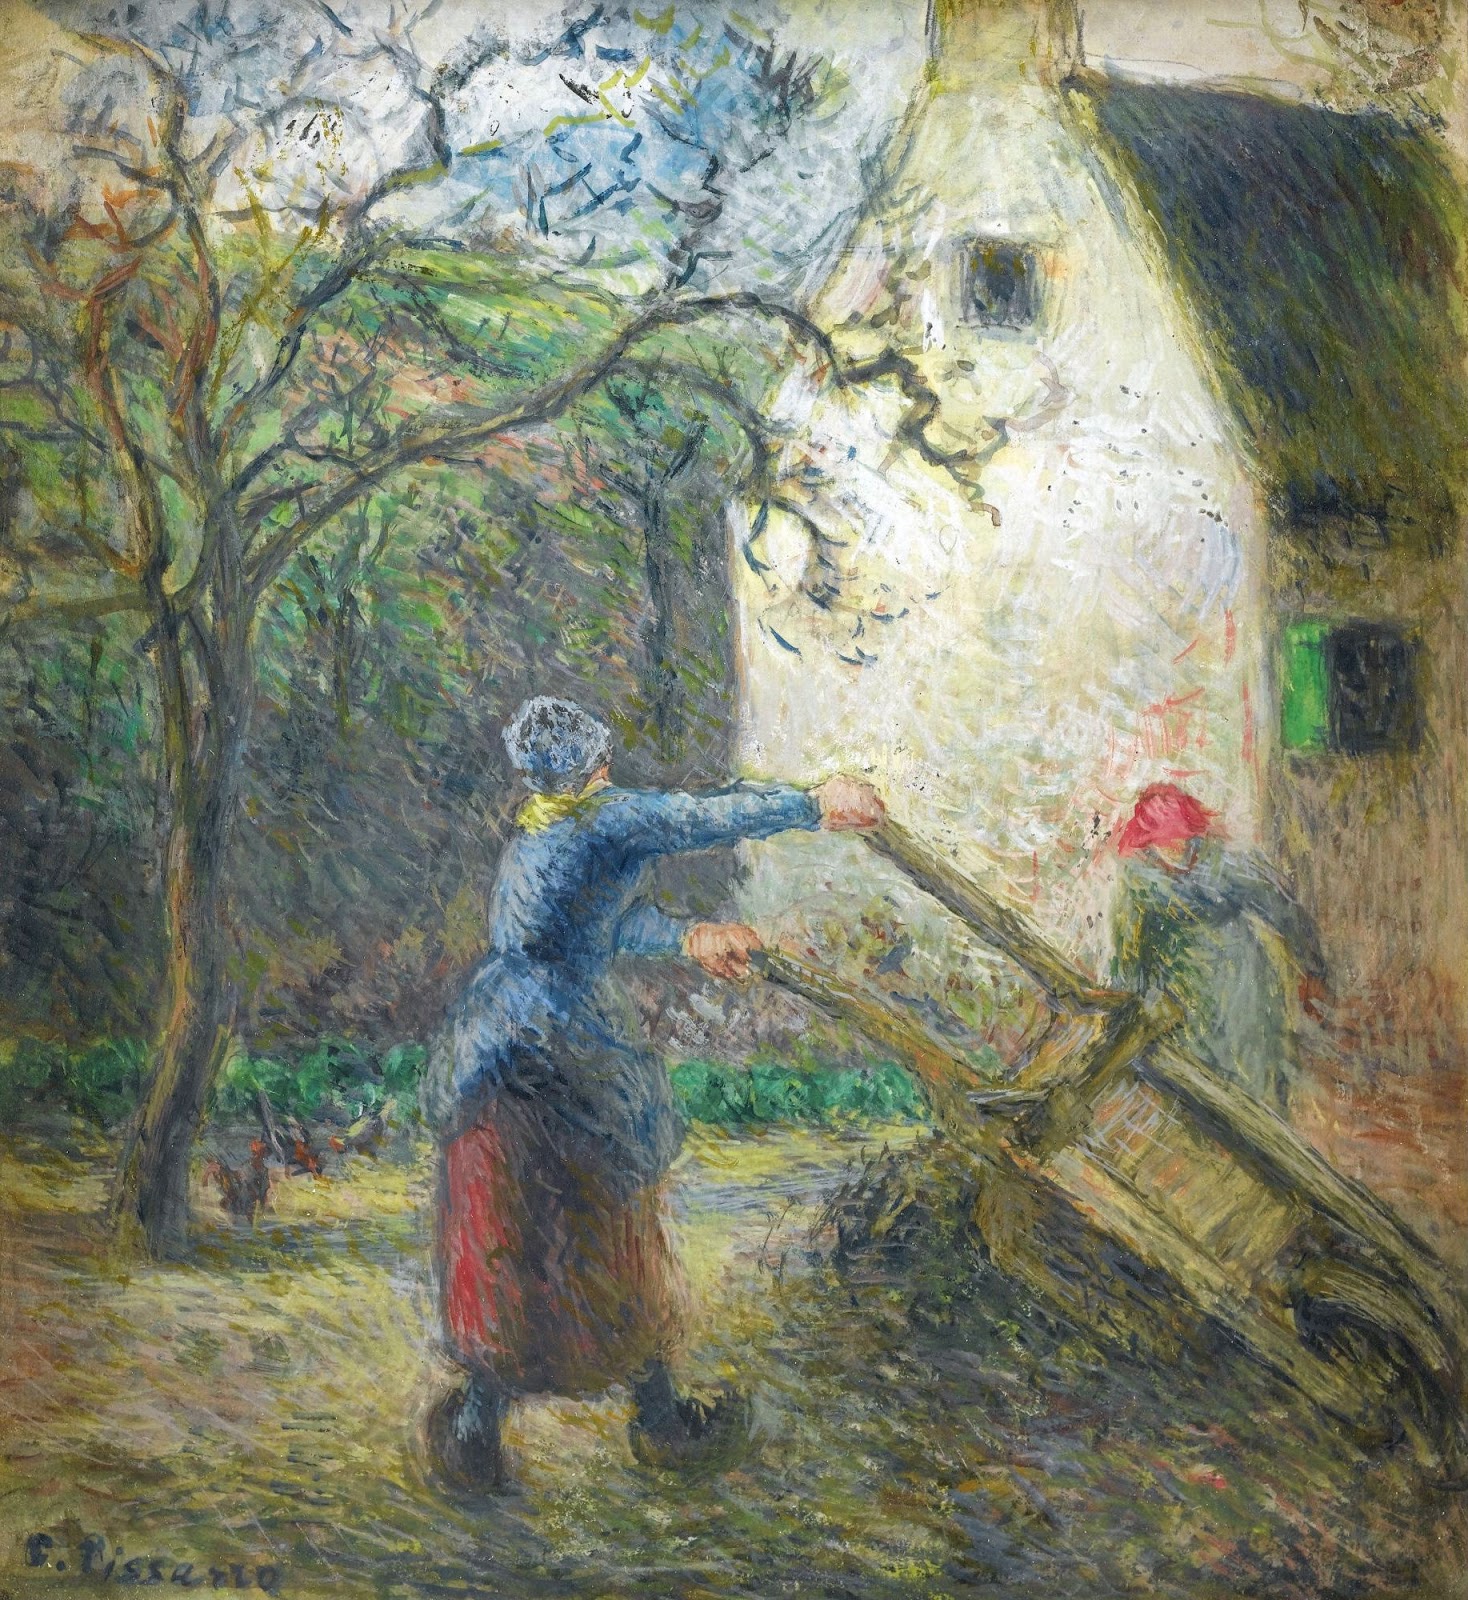 Camille+Pissarro-1830-1903 (444).jpg